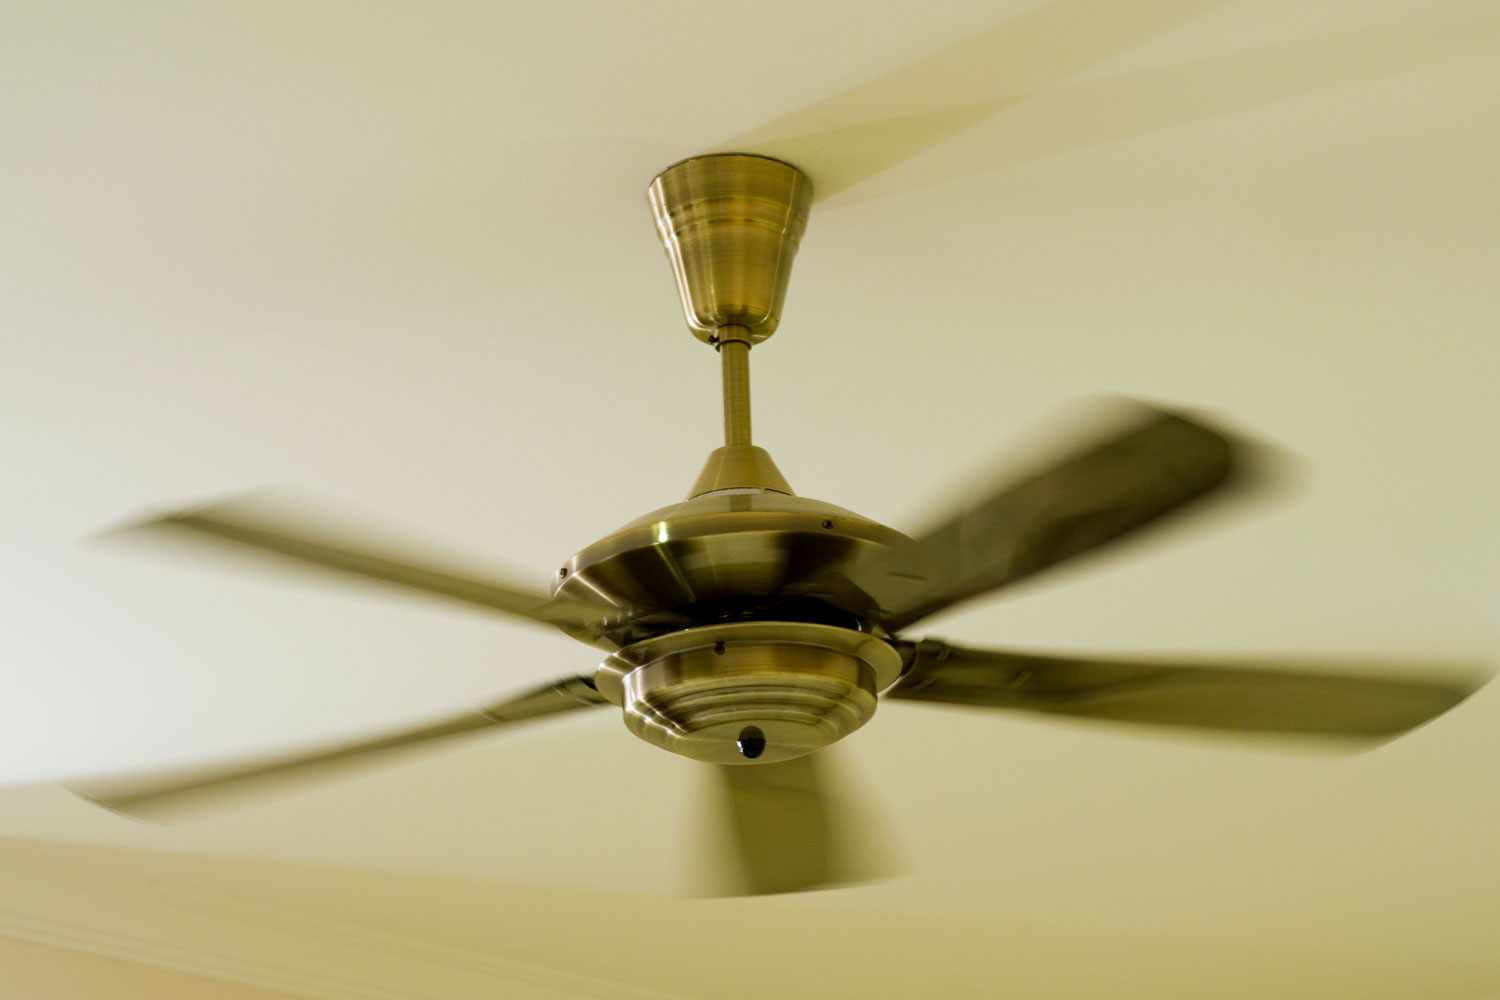 A ceiling fan spinning fast inside a room